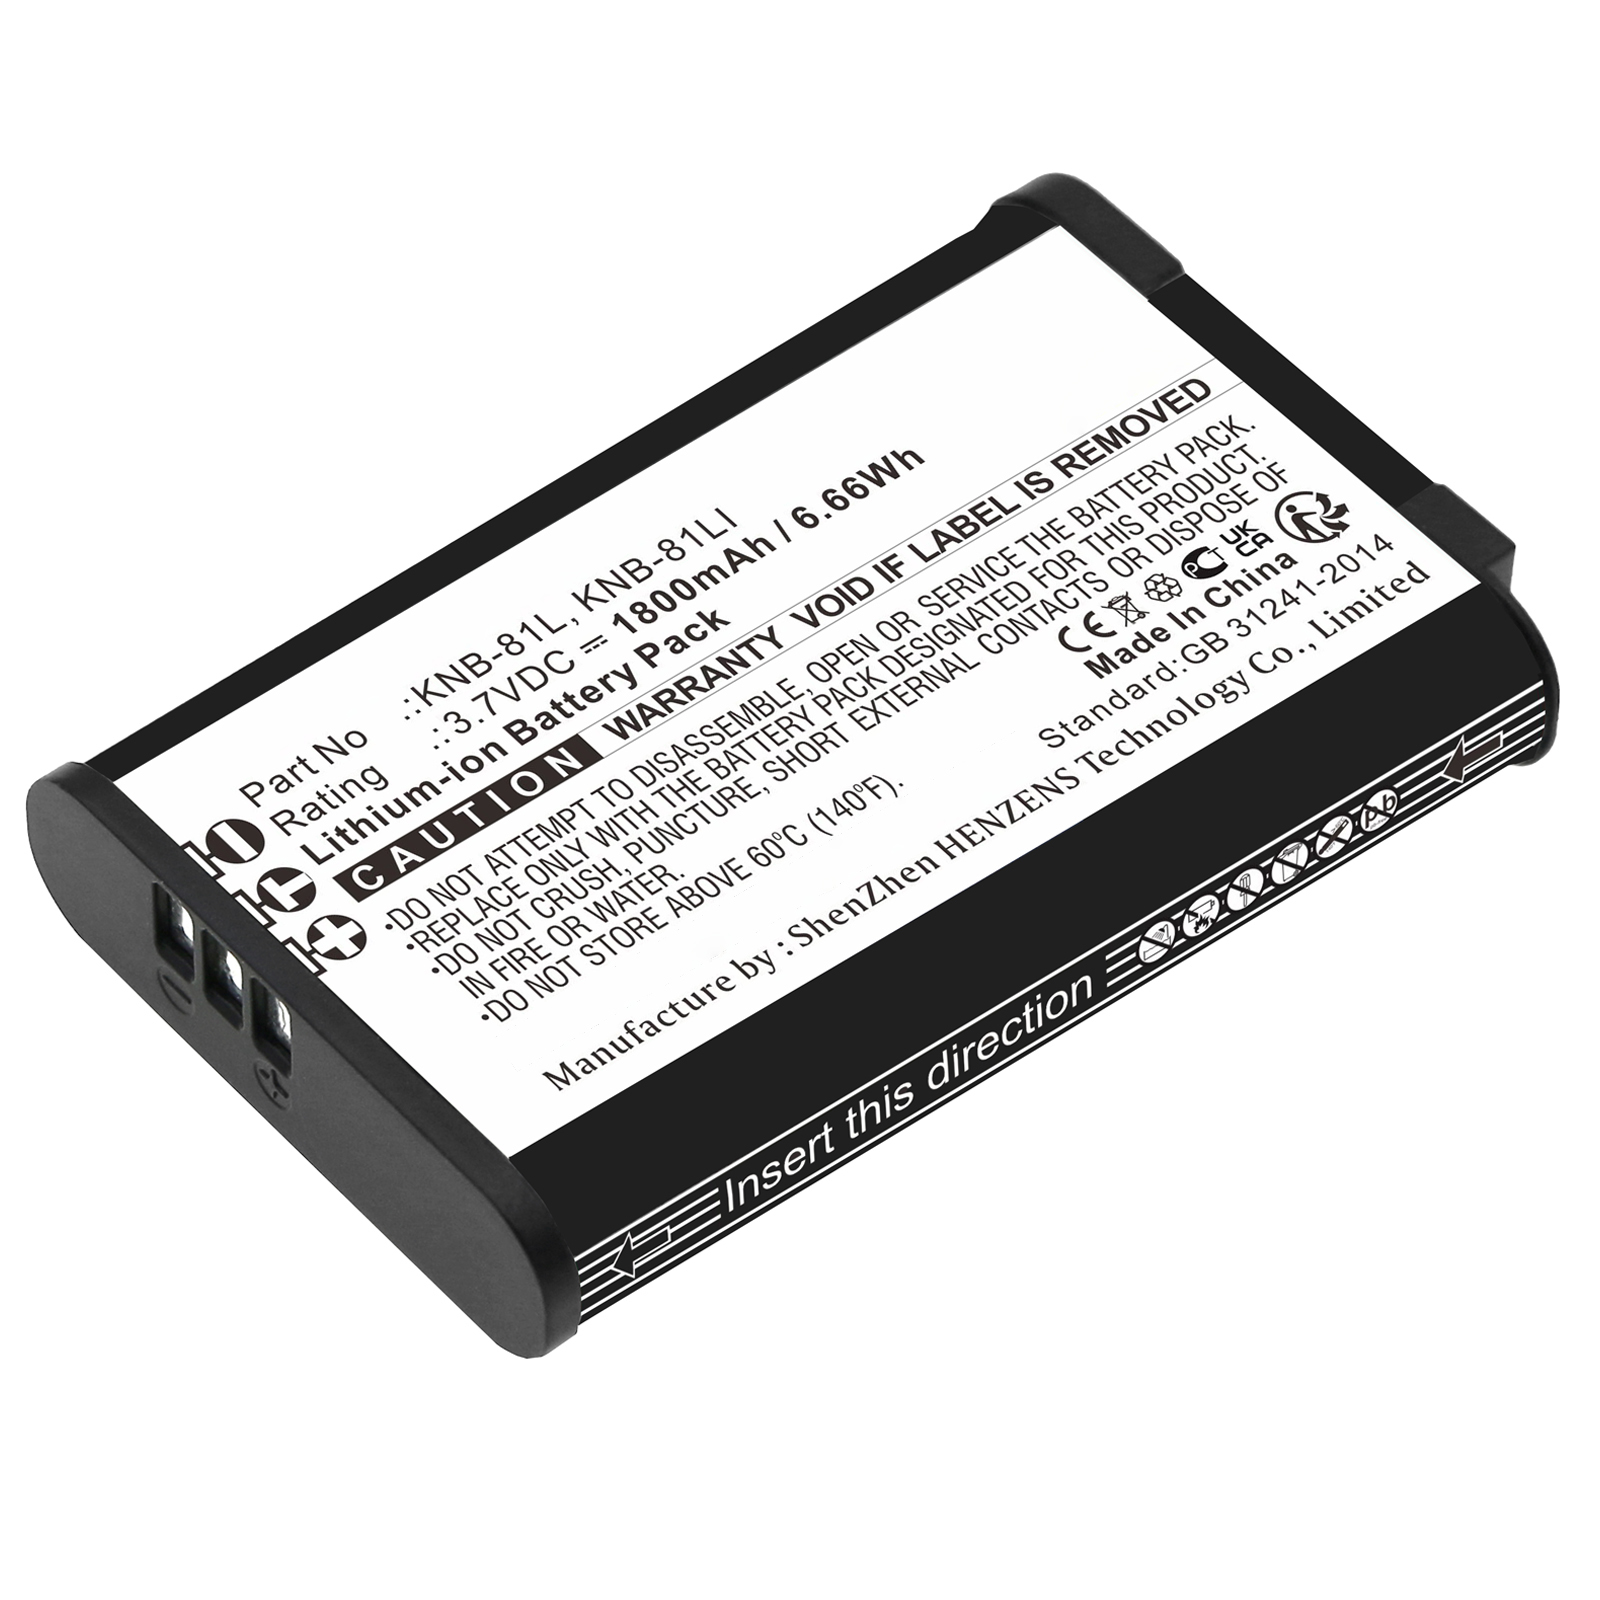 Synergy Digital 2-Way Radio Battery, Compatible with Kenwood KNB-81L 2-Way Radio Battery (Li-ion, 3.7V, 1800mAh)